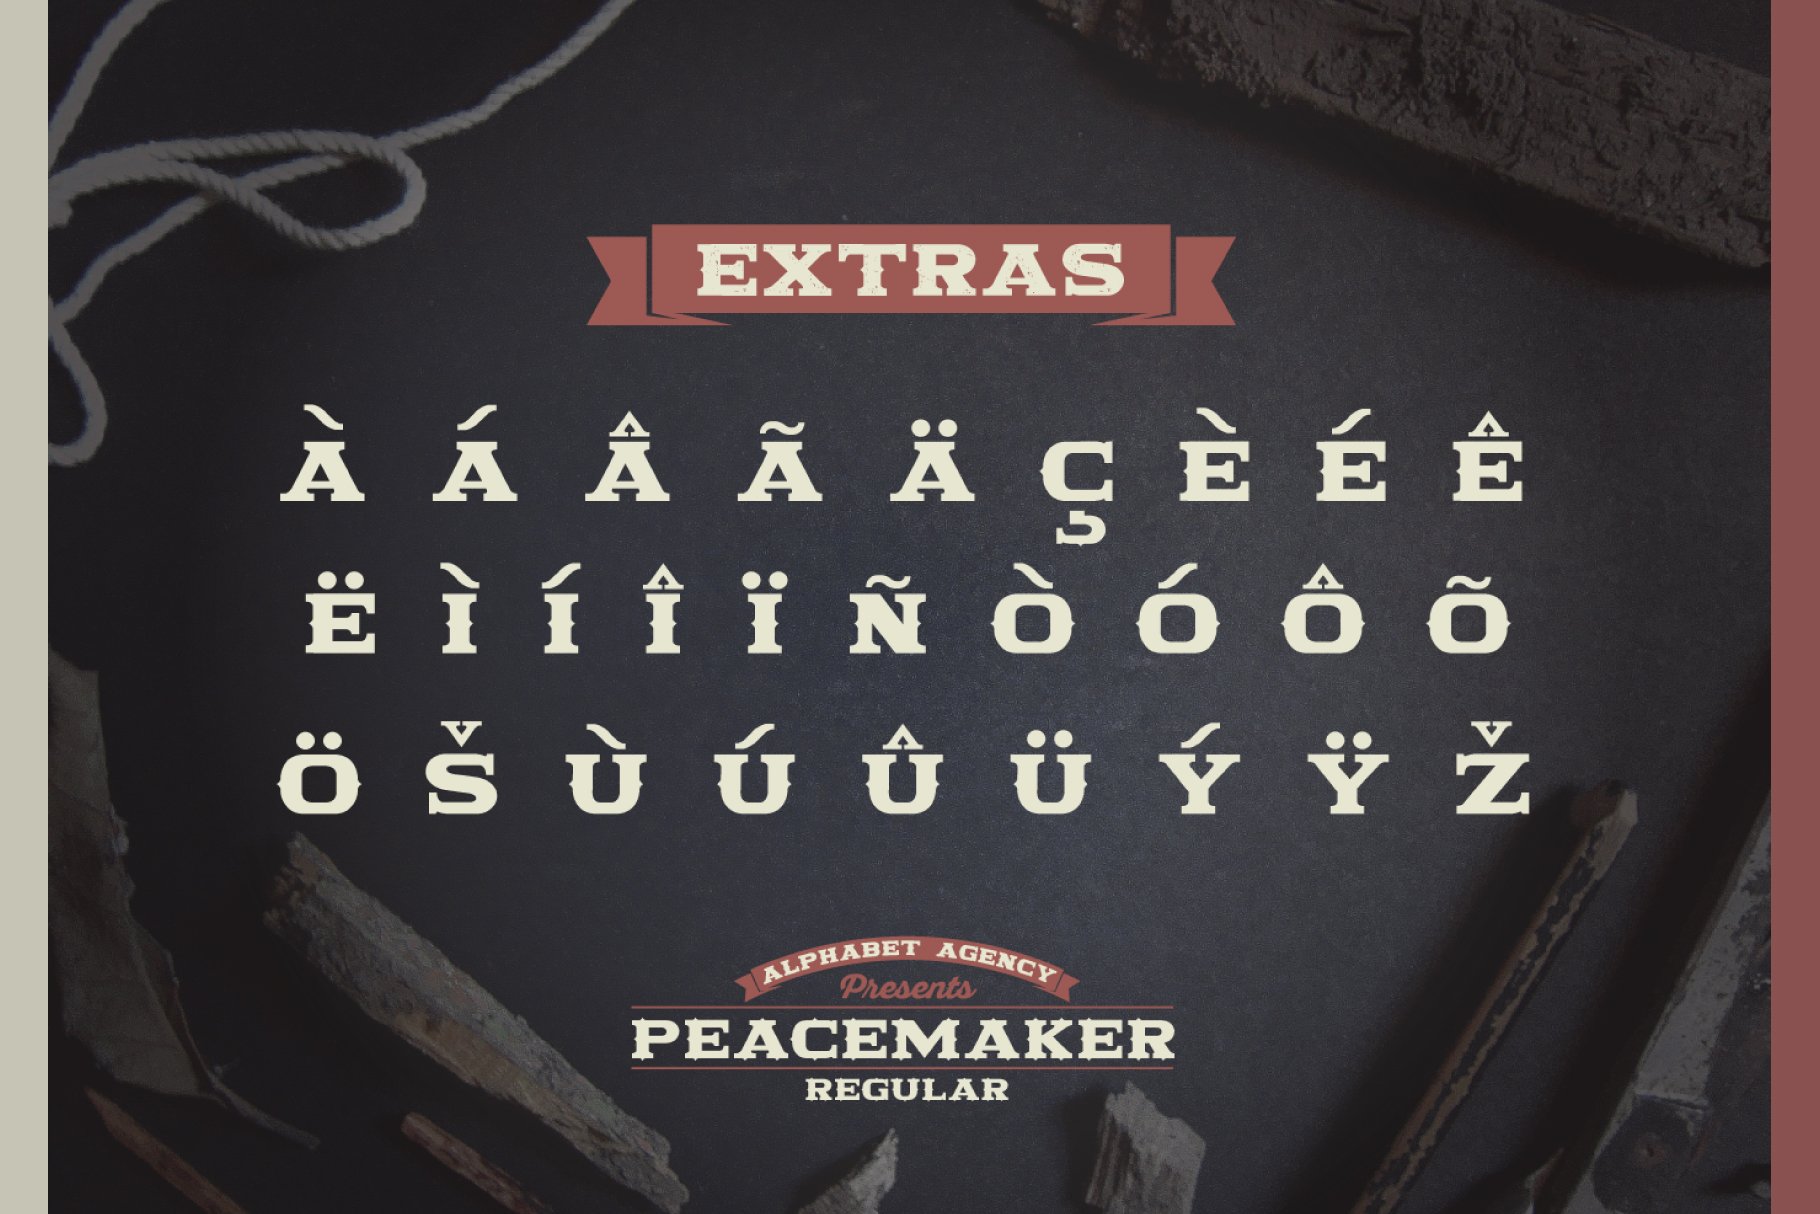 peacemaker regular extras2 1820x1214 42